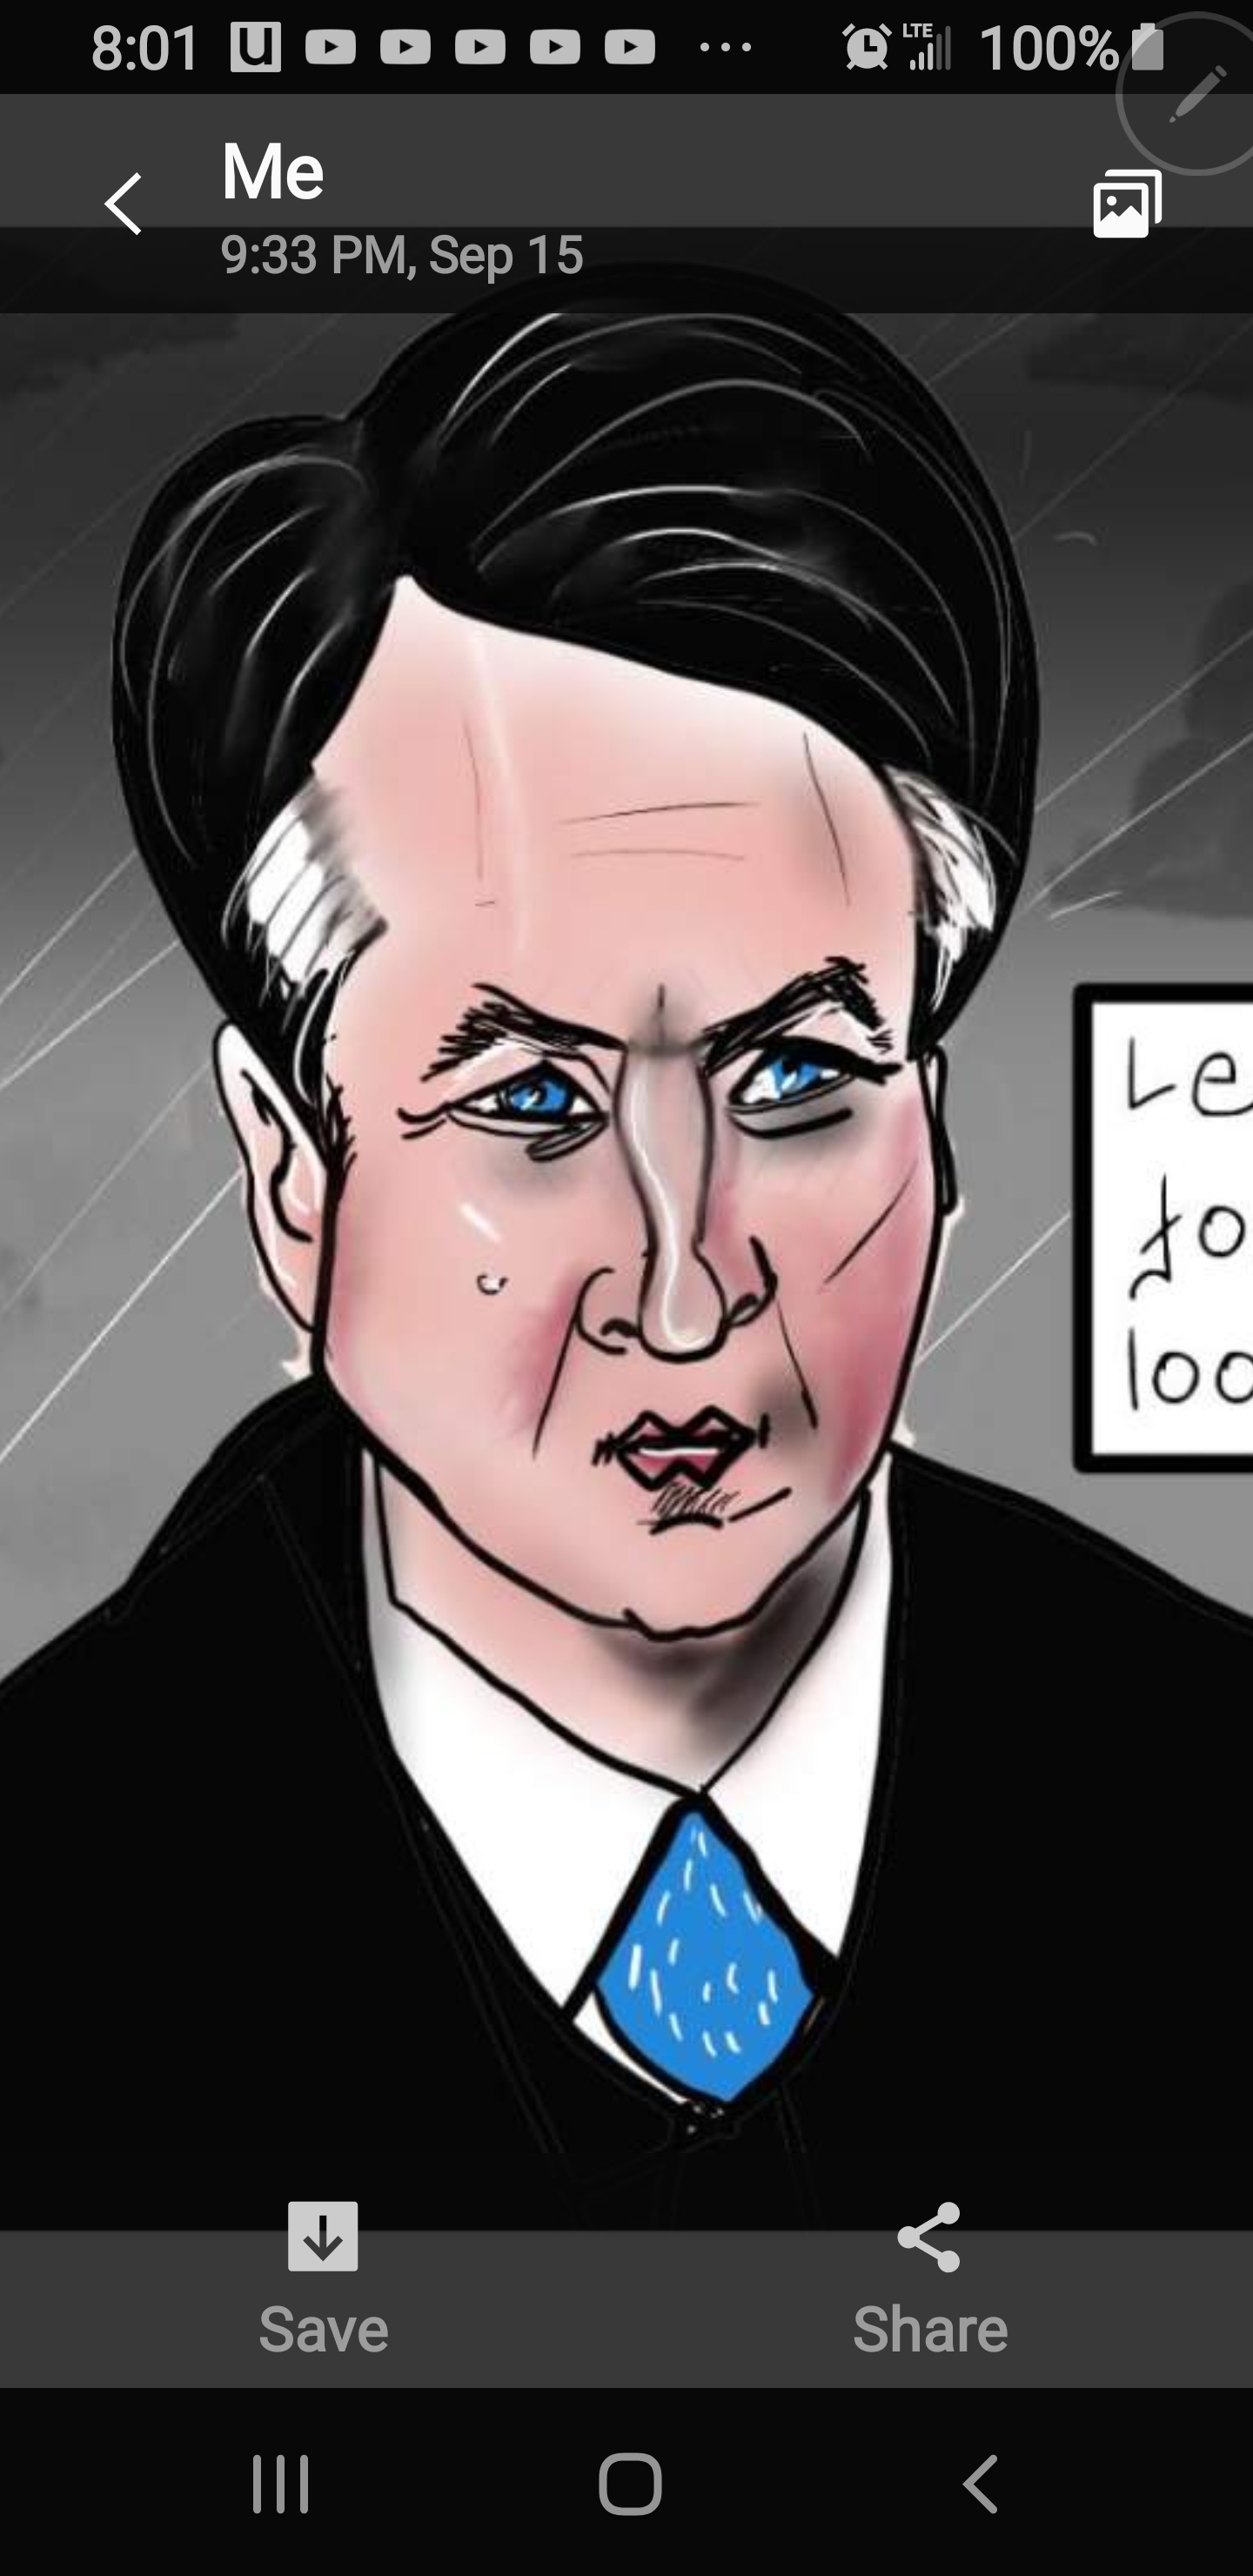 Judge Brett Kavanaugh political cartoon post thumbnail image